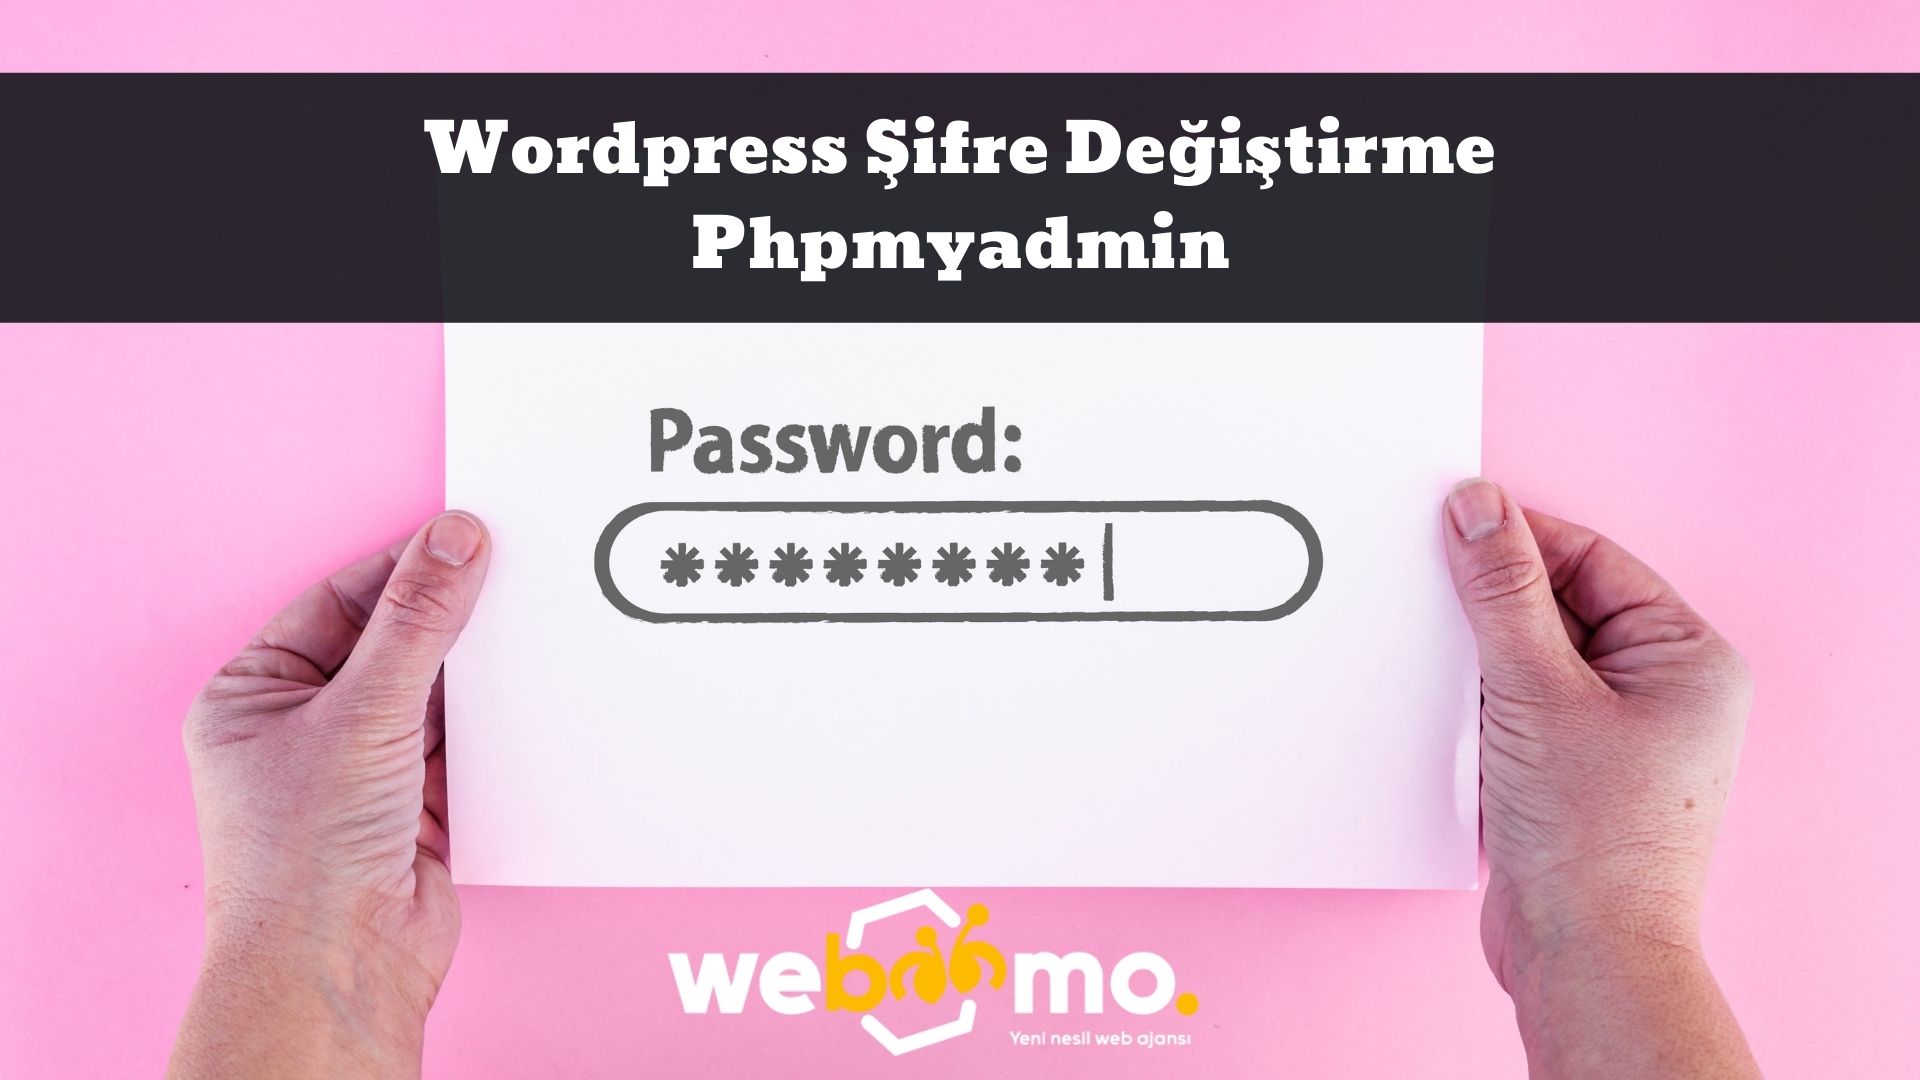 Wordpress Sifre Degistirme Phpmyadmin